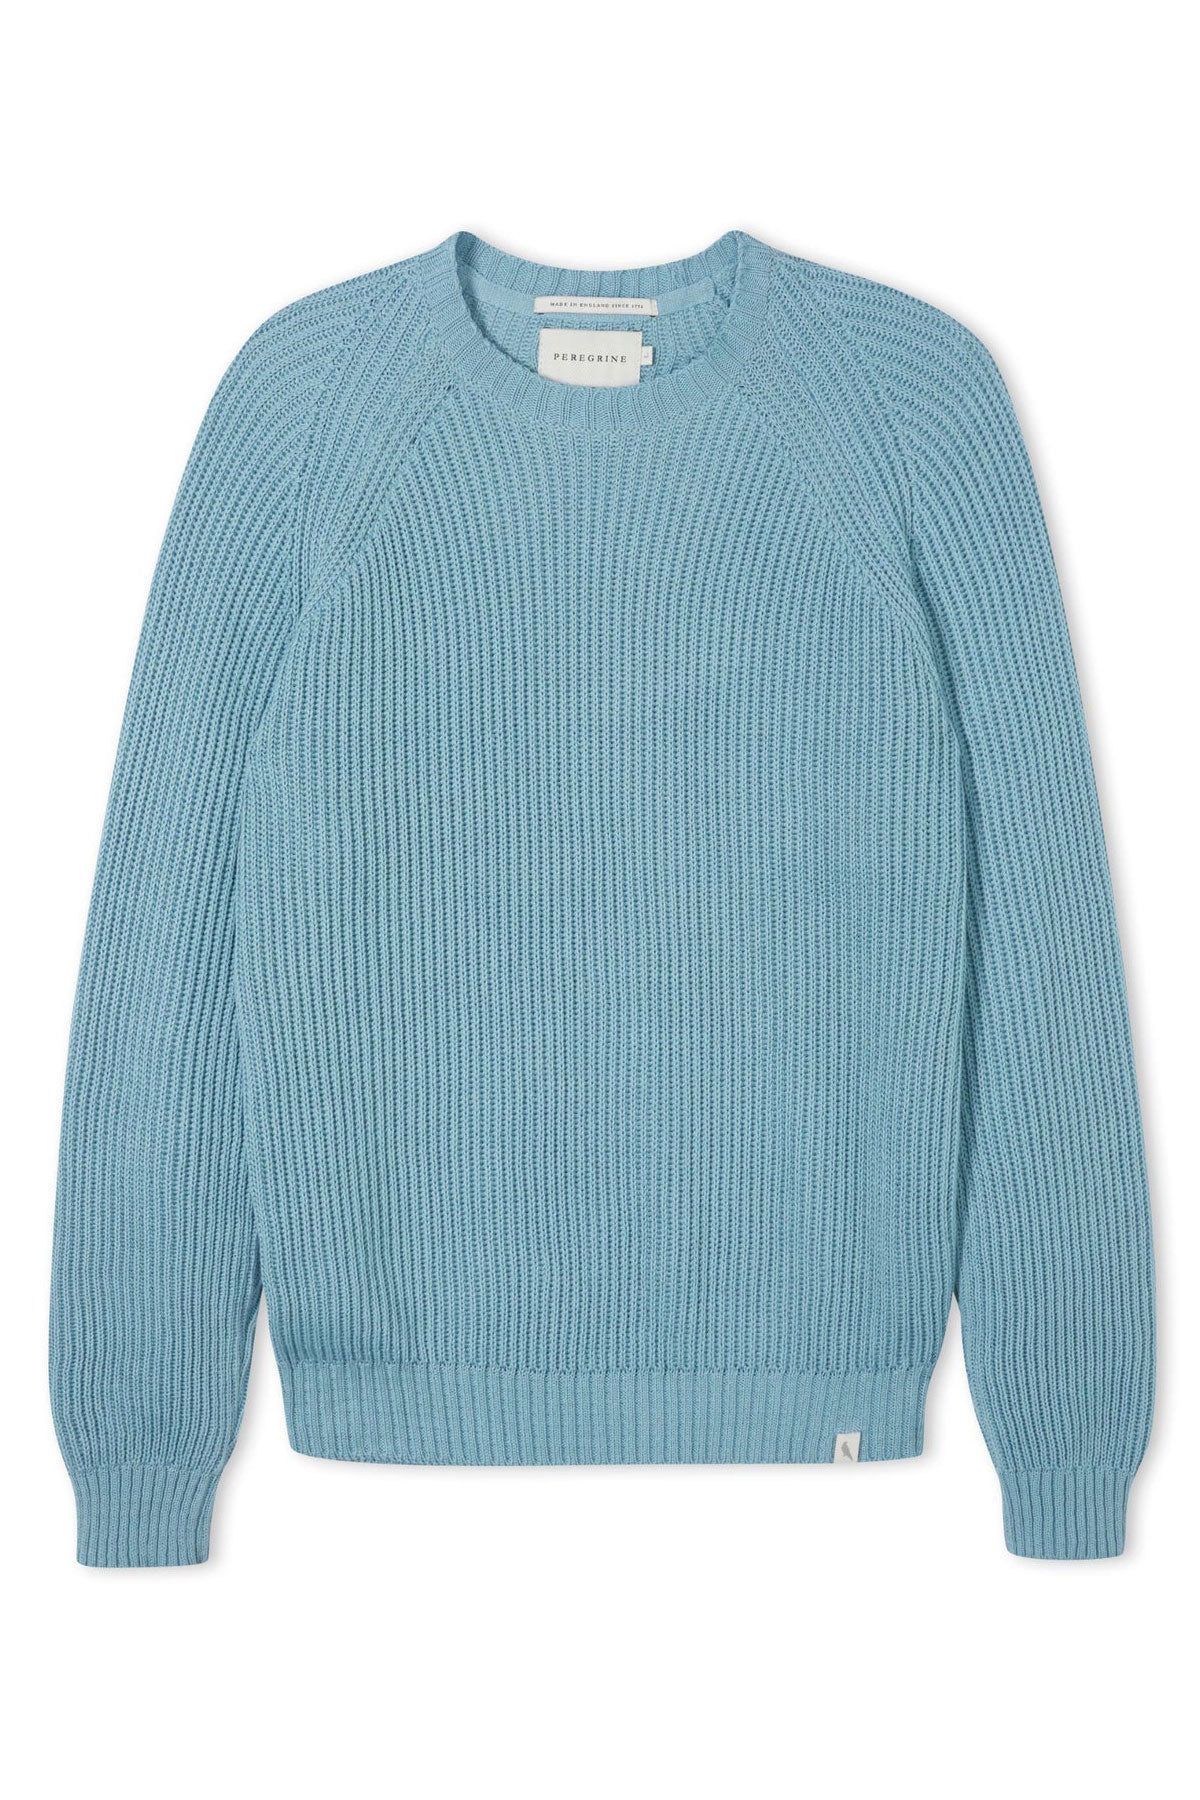 Peregrine - Harry Cotton Sweater in Seafoam